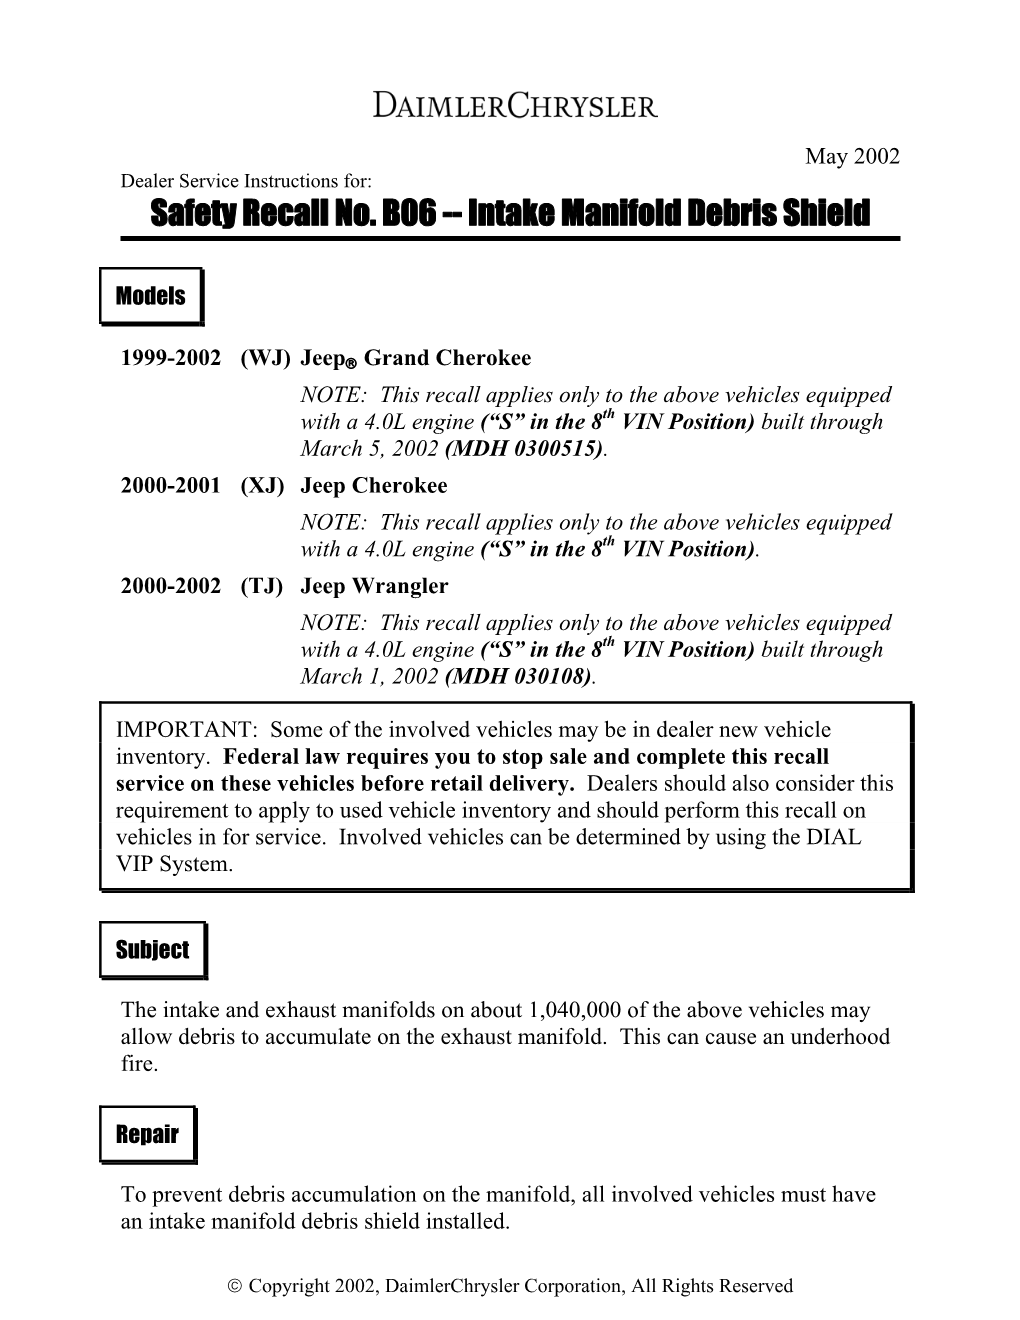 Safety Recall No. B06 -- Intake Manifold Debris Shield